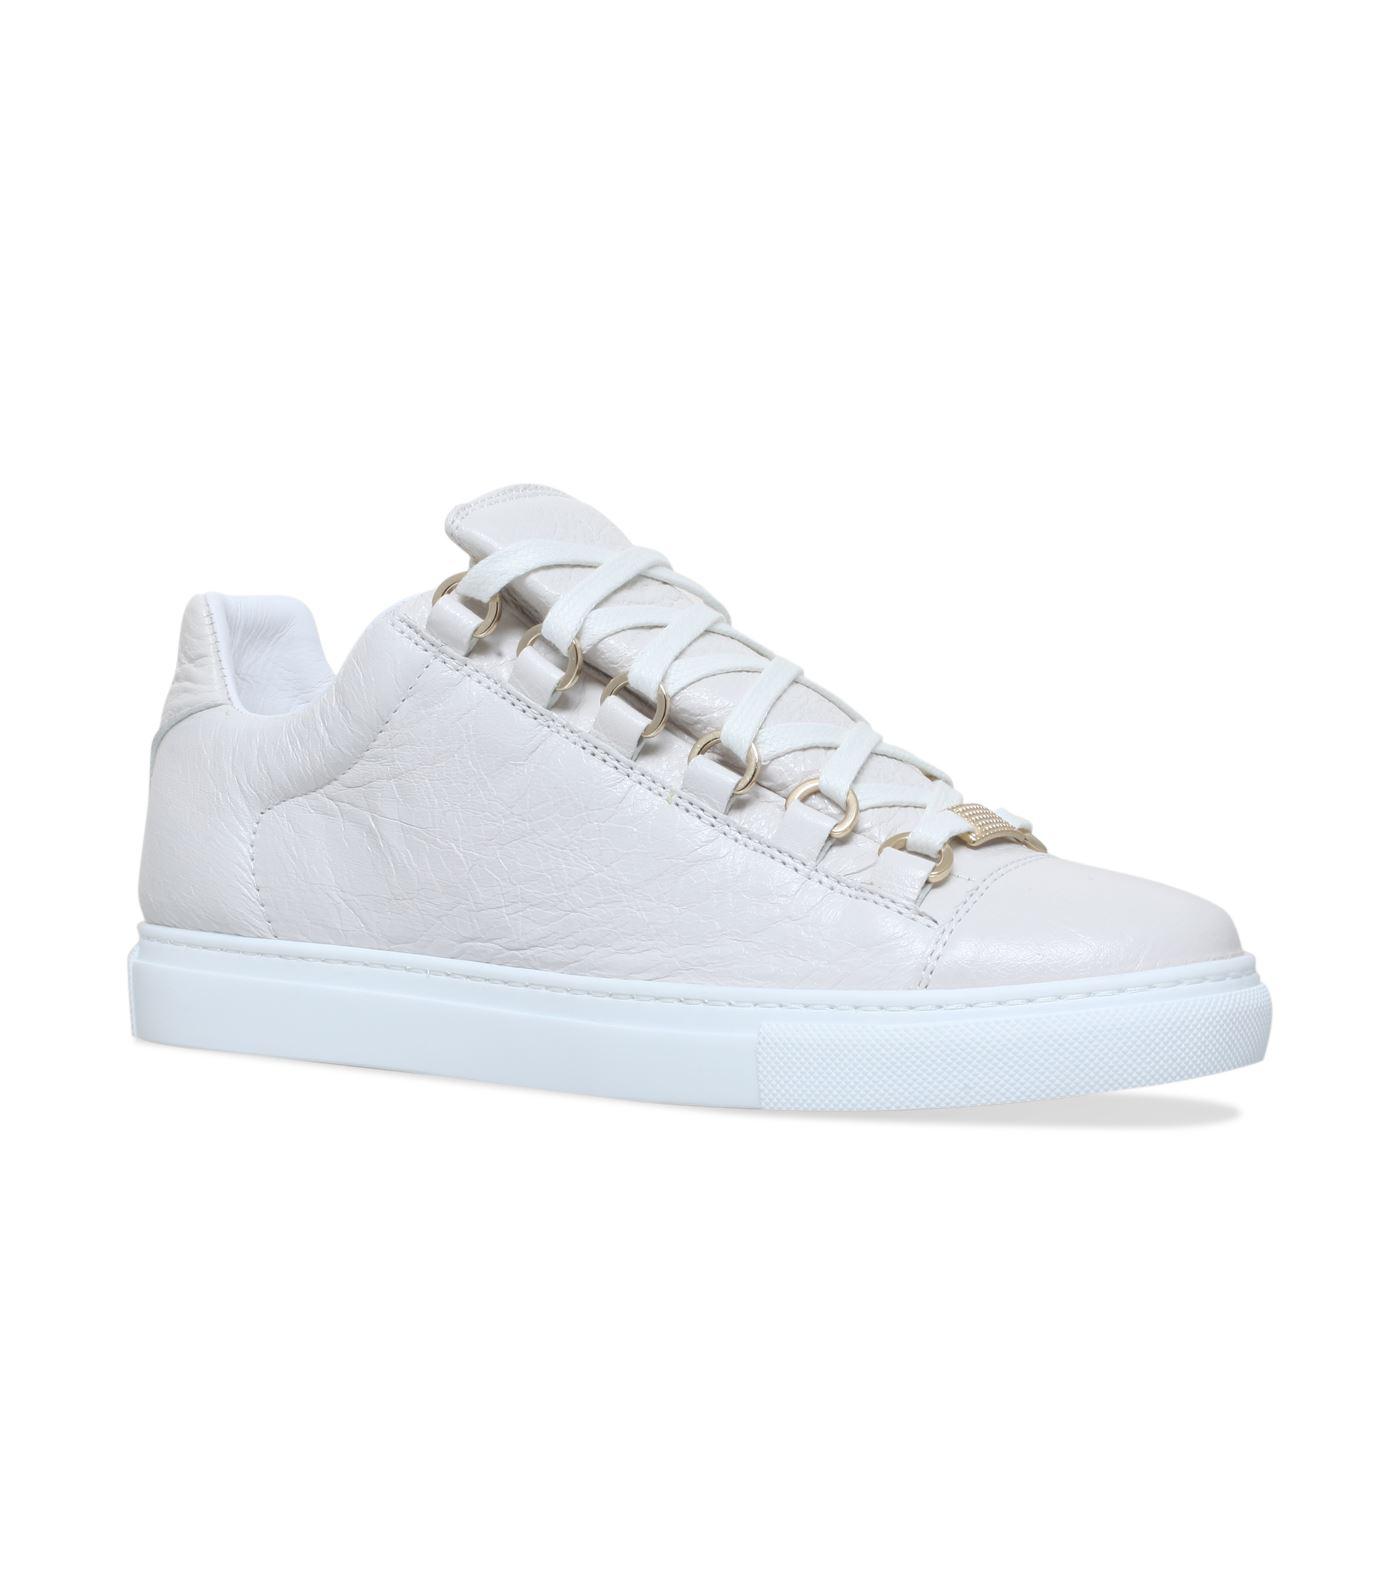 Dare Støv imperium Balenciaga Arena Low Top Sneakers in White | Lyst UK